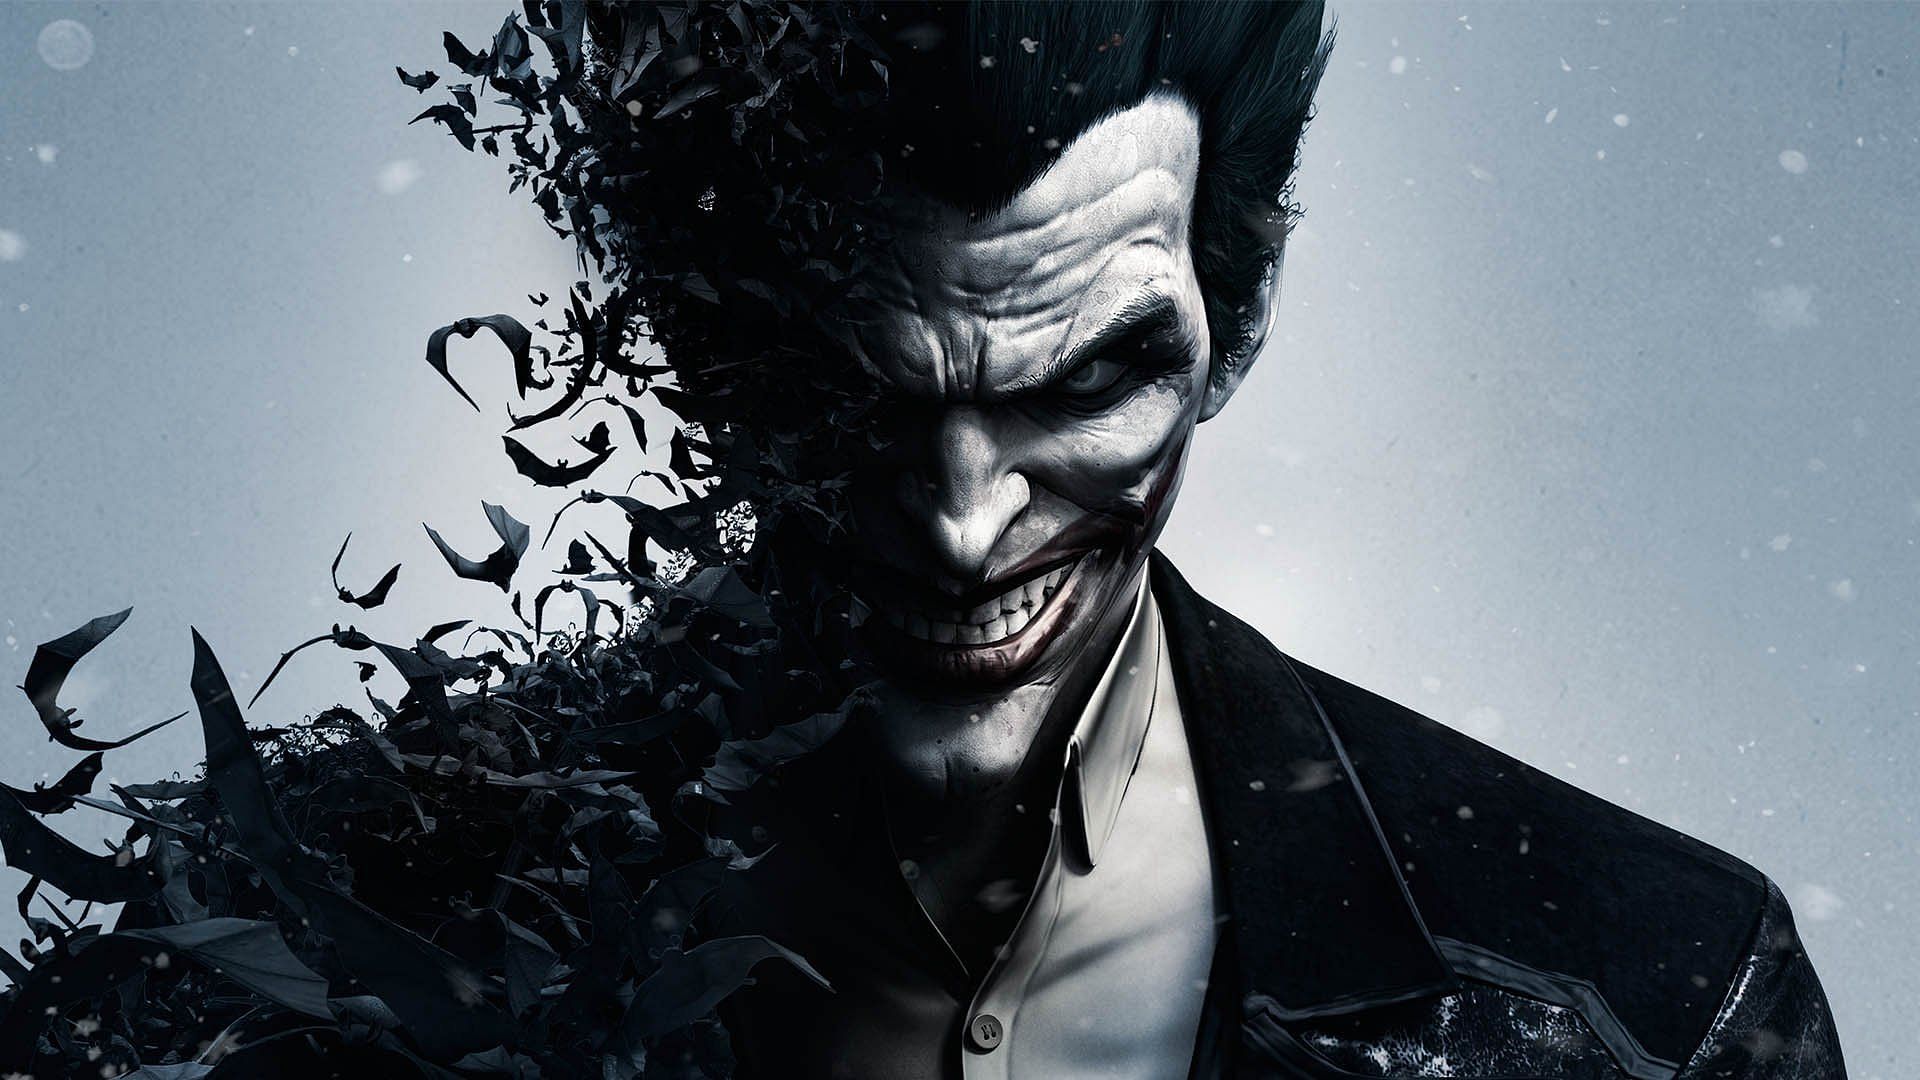 The Joker (Image via WB)